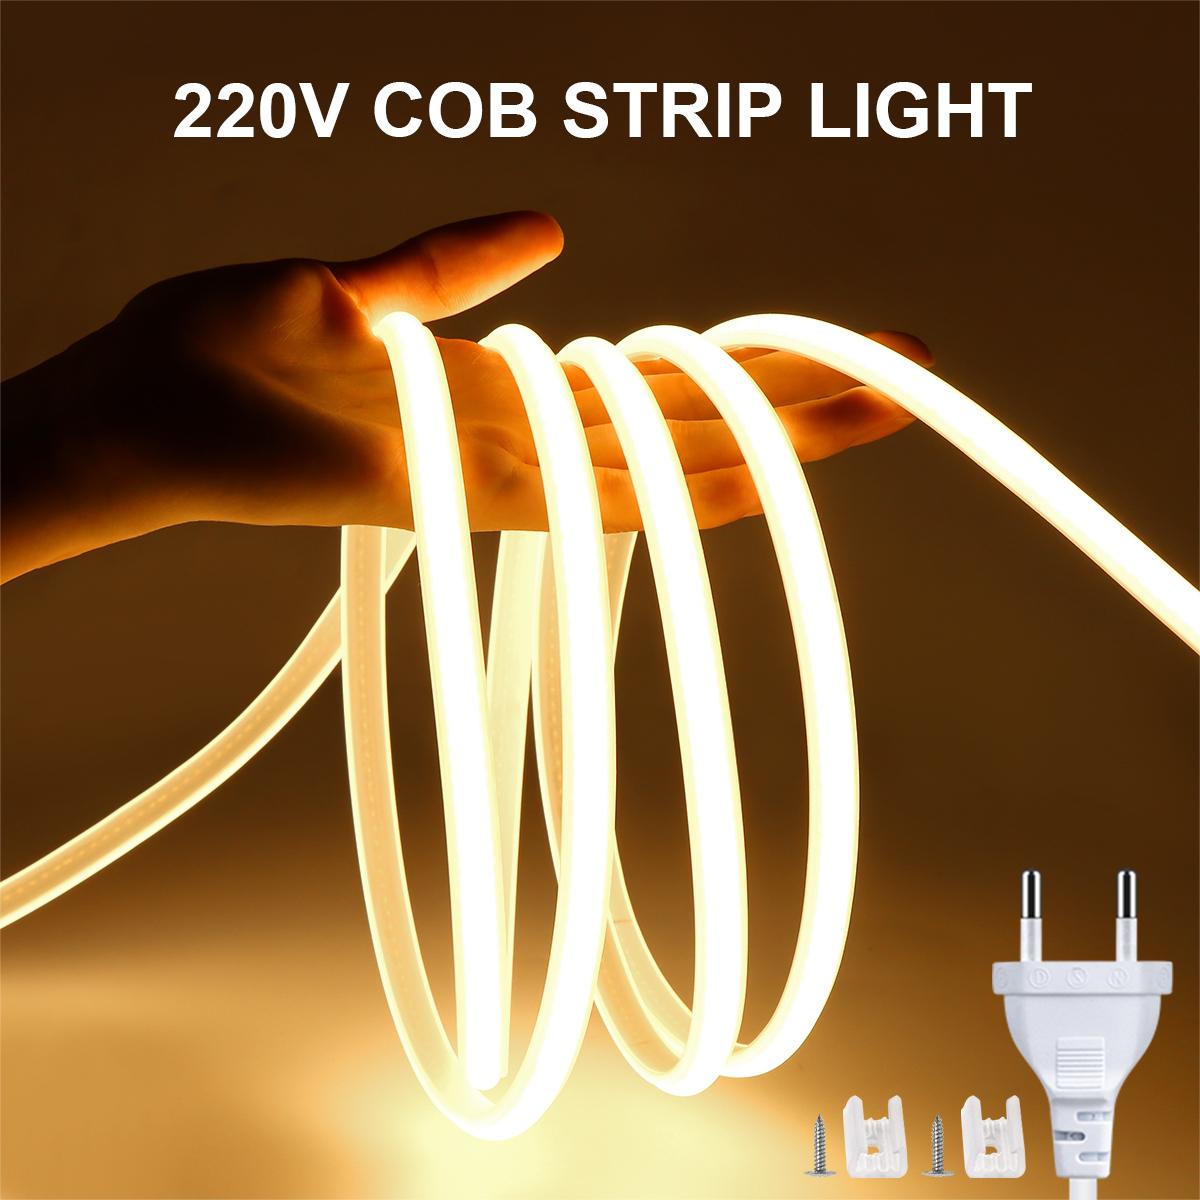 STRISCE LED COB 220V